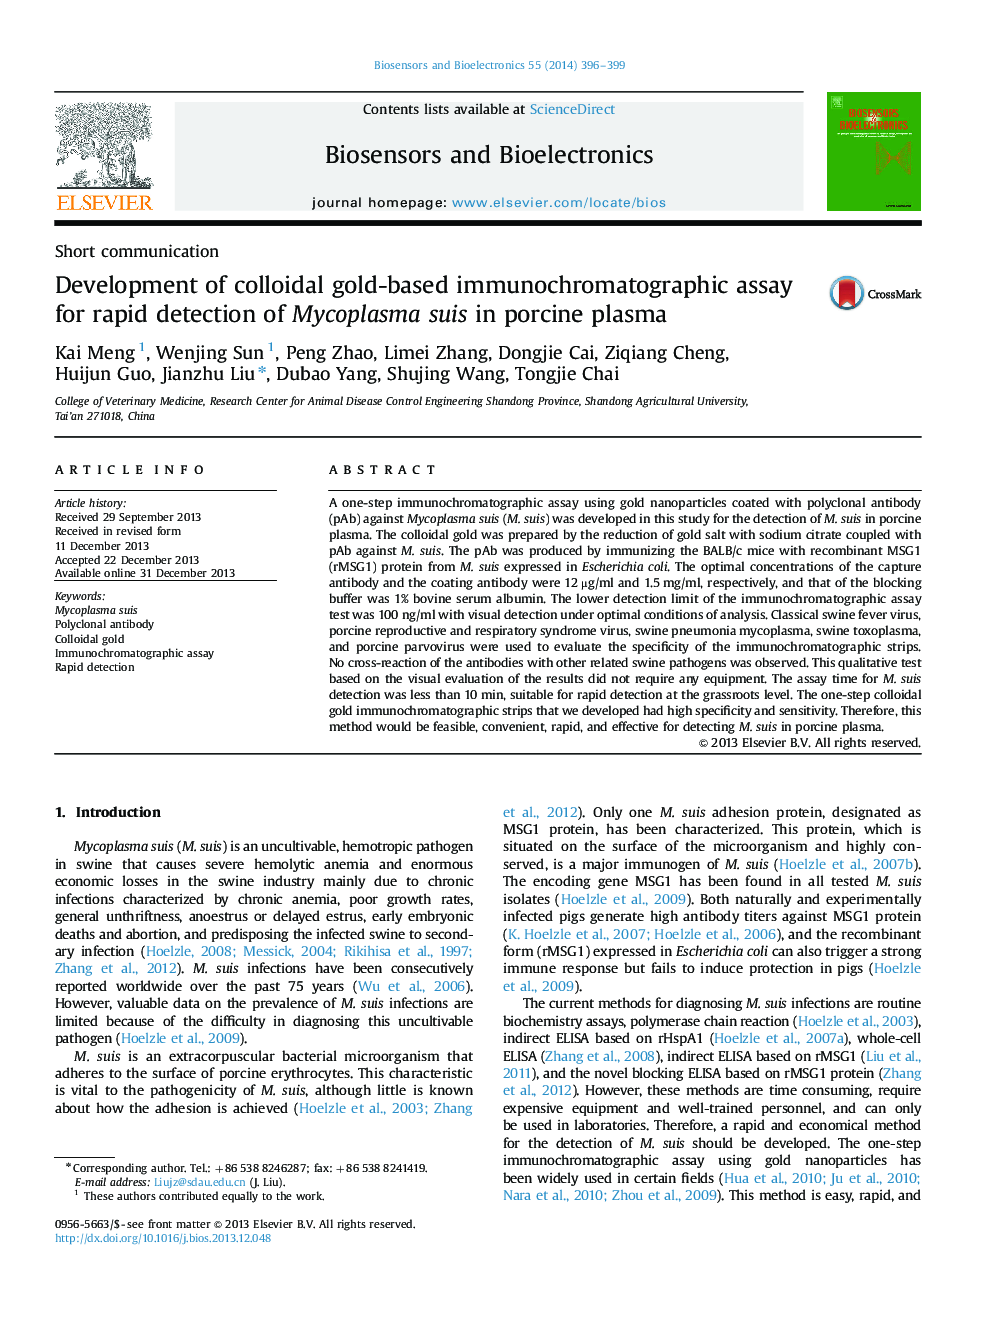 Development of colloidal gold-based immunochromatographic assay for rapid detection of Mycoplasma suis in porcine plasma